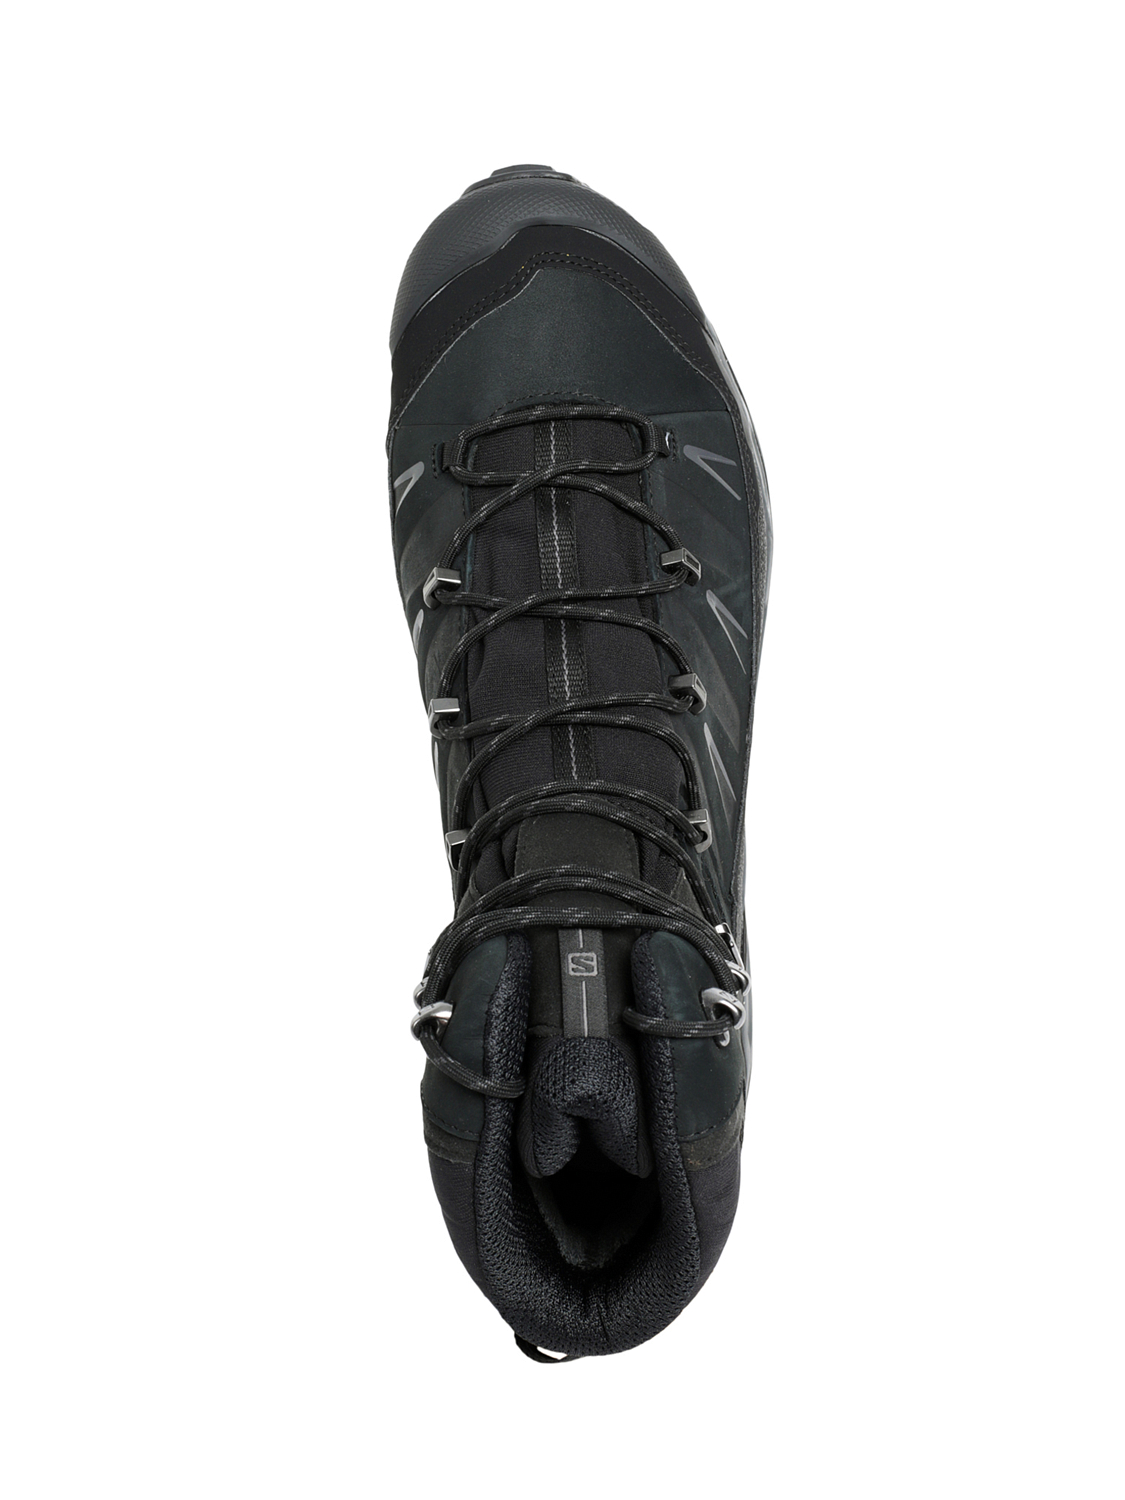 Треккинговые ботинки SALOMON X Ultra Trek GTX Black